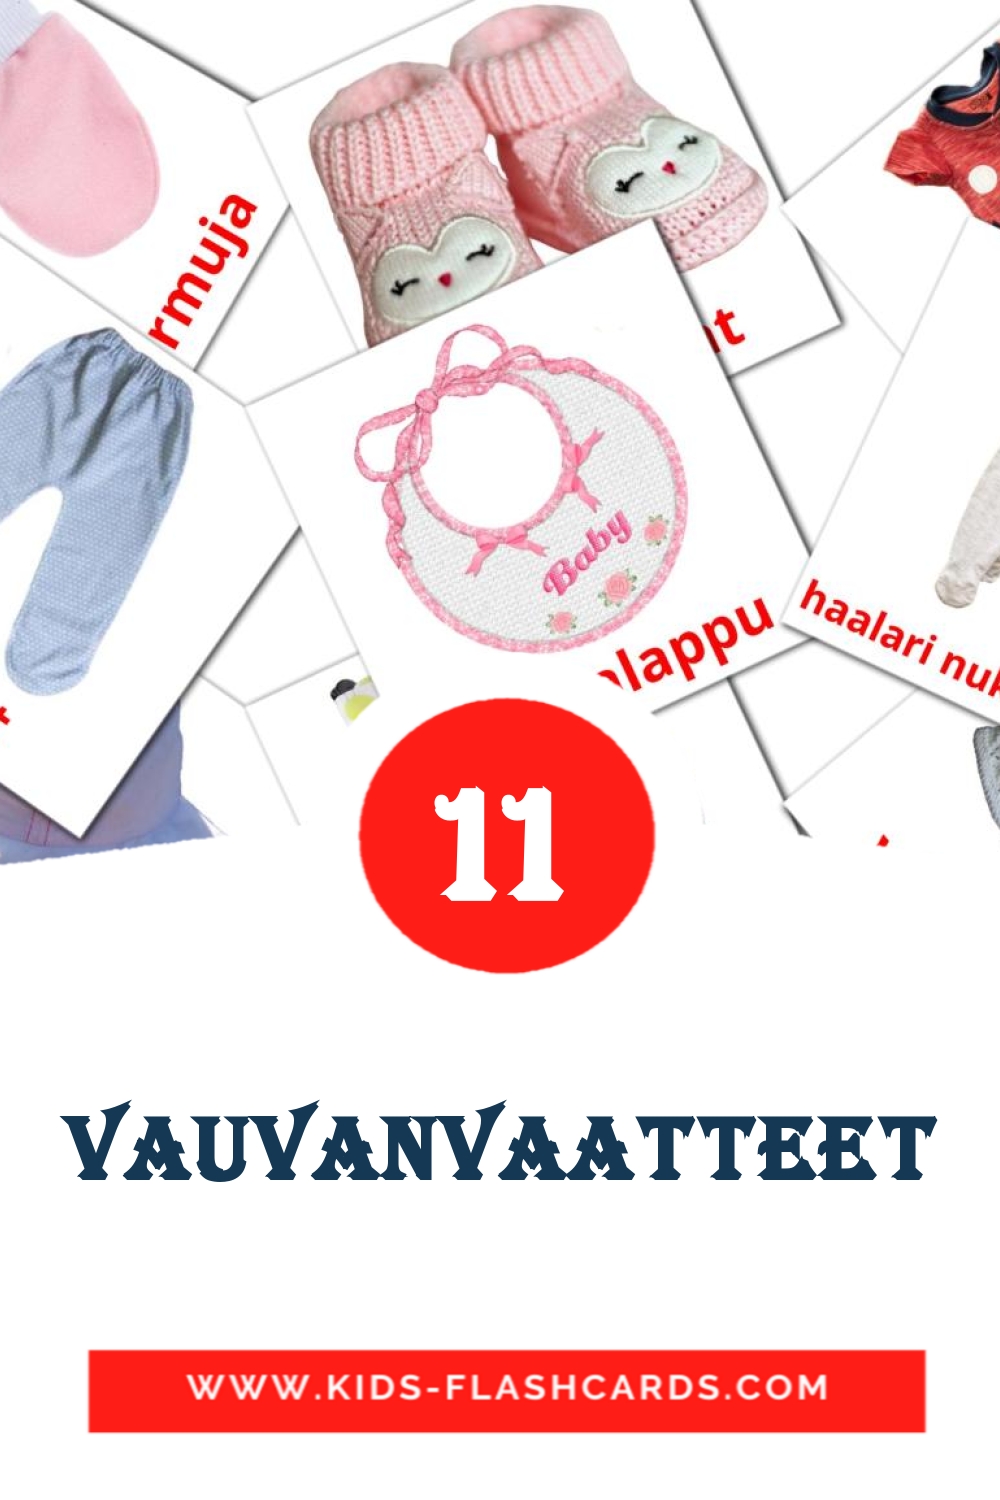 11 carte illustrate di vauvanvaatteet per la scuola materna in finlandese